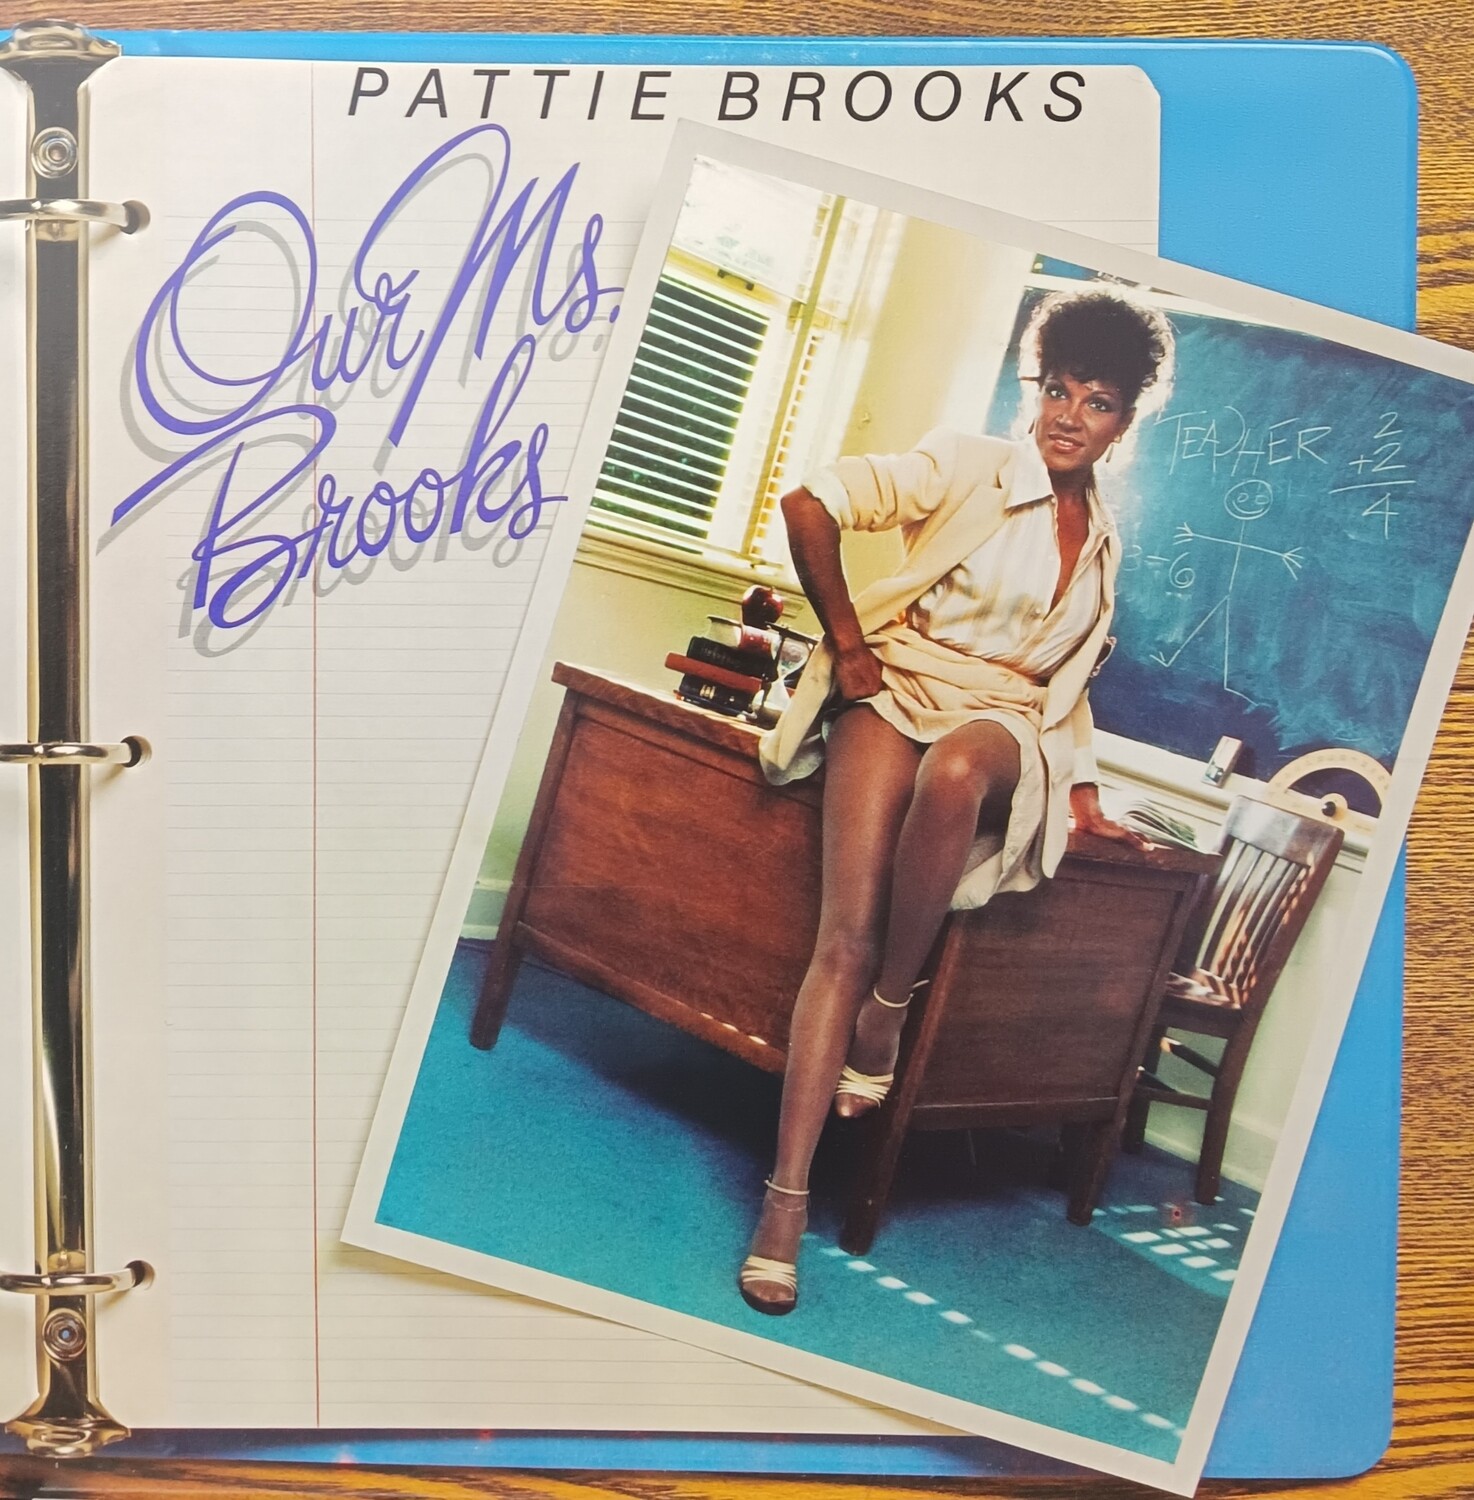 PATTIE BROOKS - Our Ms Brooks